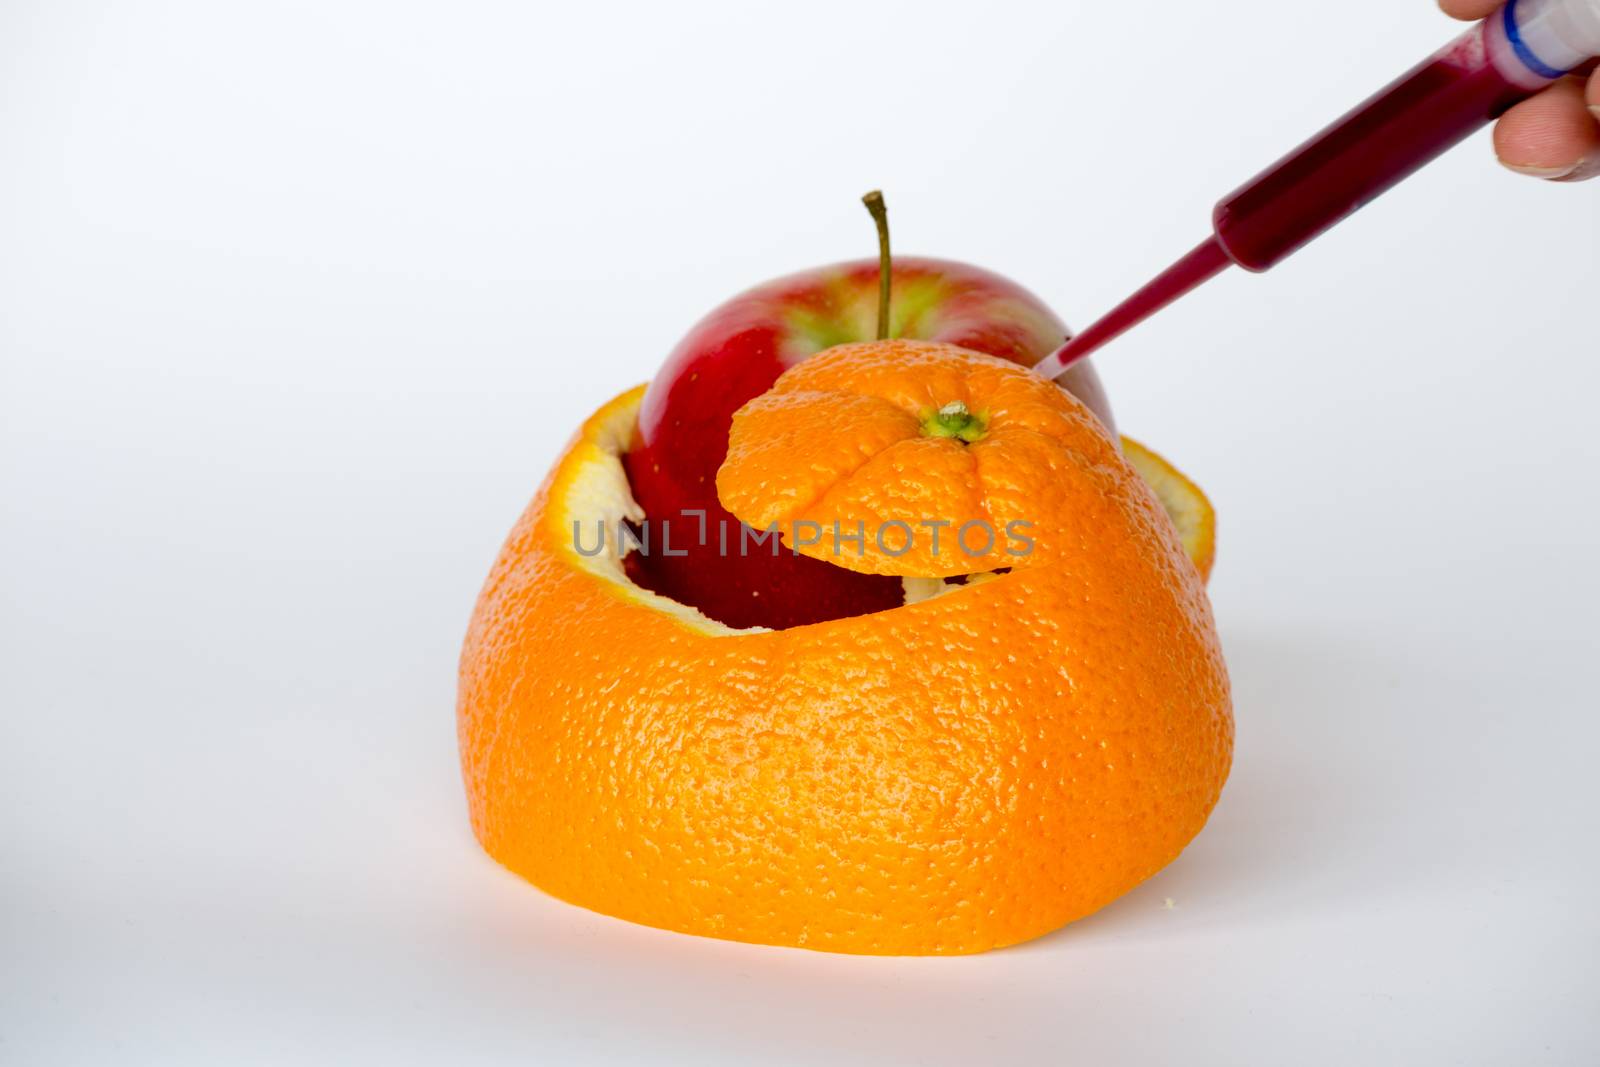 Gene editing an orange by rmbarricarte